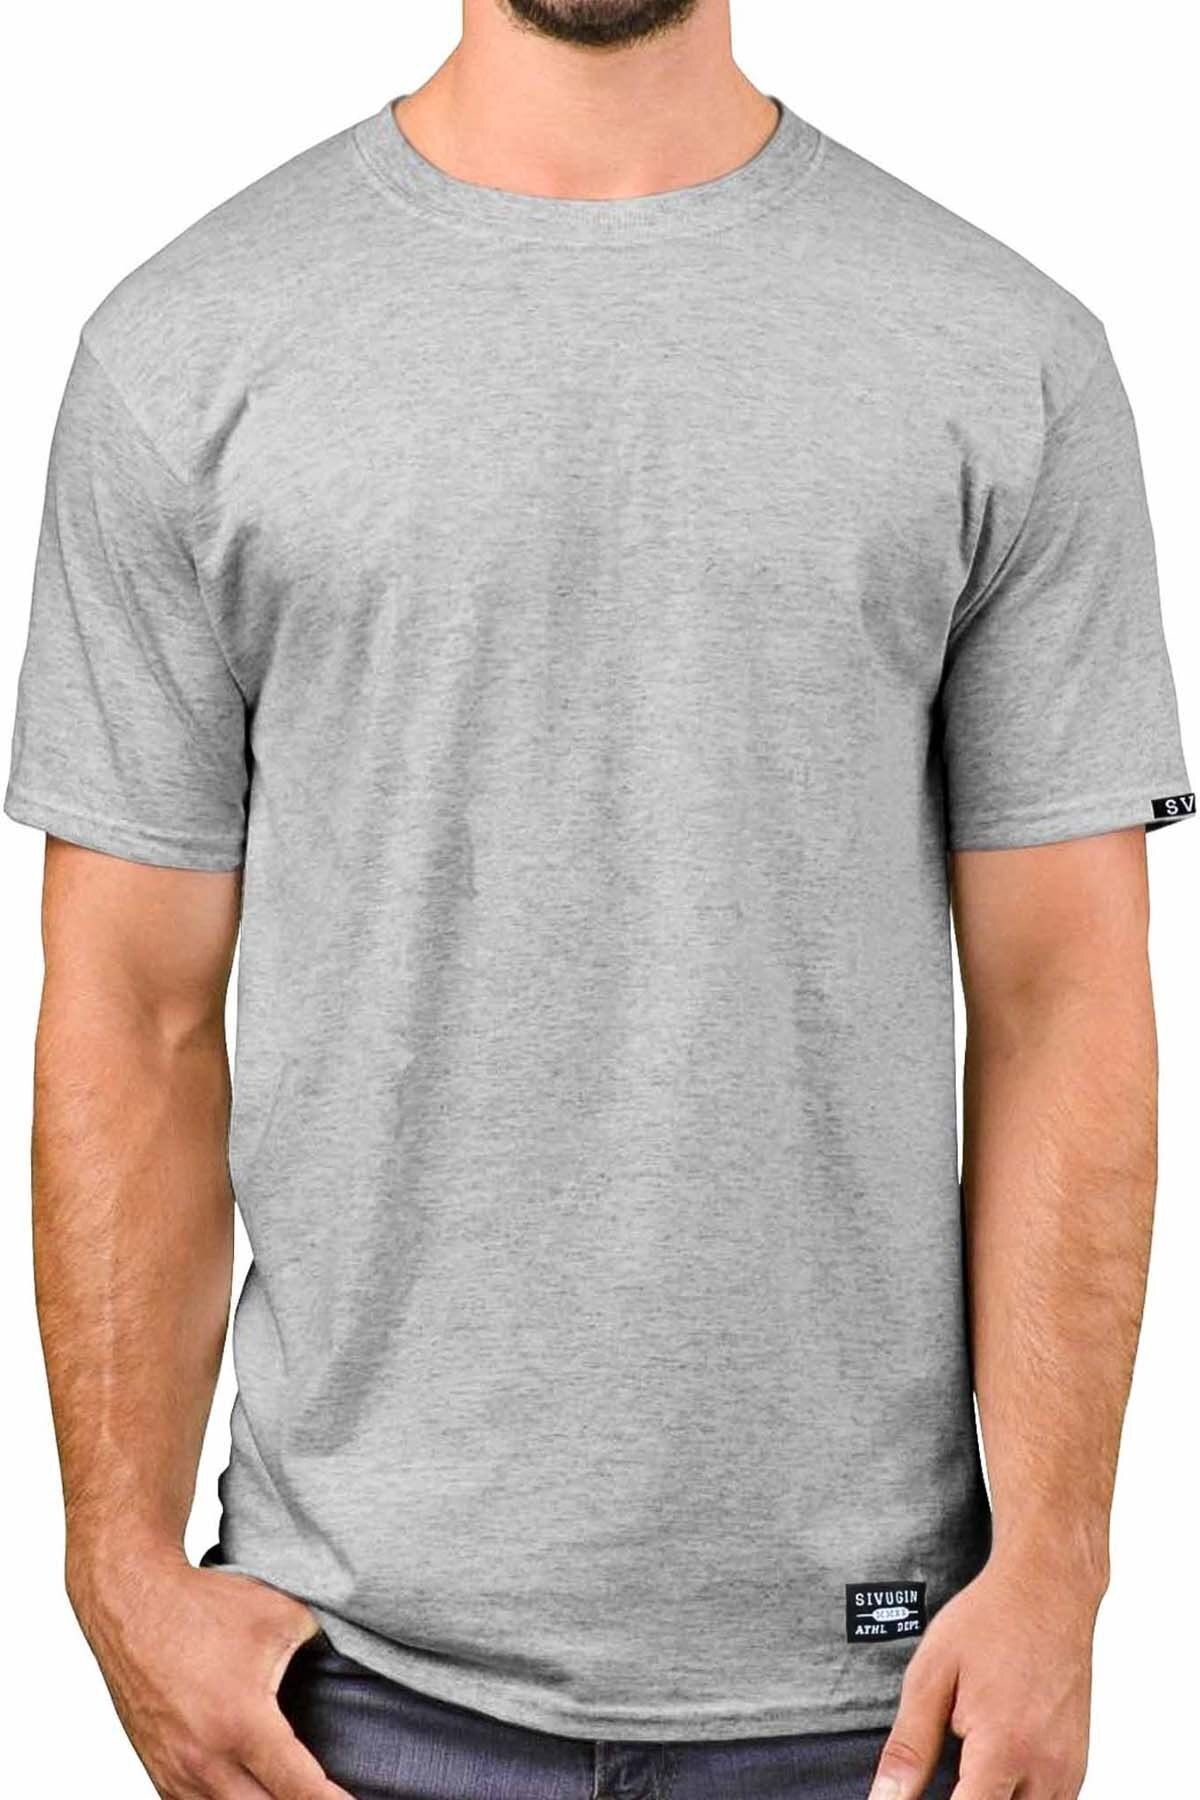 Sivugin Açık Gri Pamuklu Yuvarlak Yaka Kısa Kol Erkek Spor T-shirt